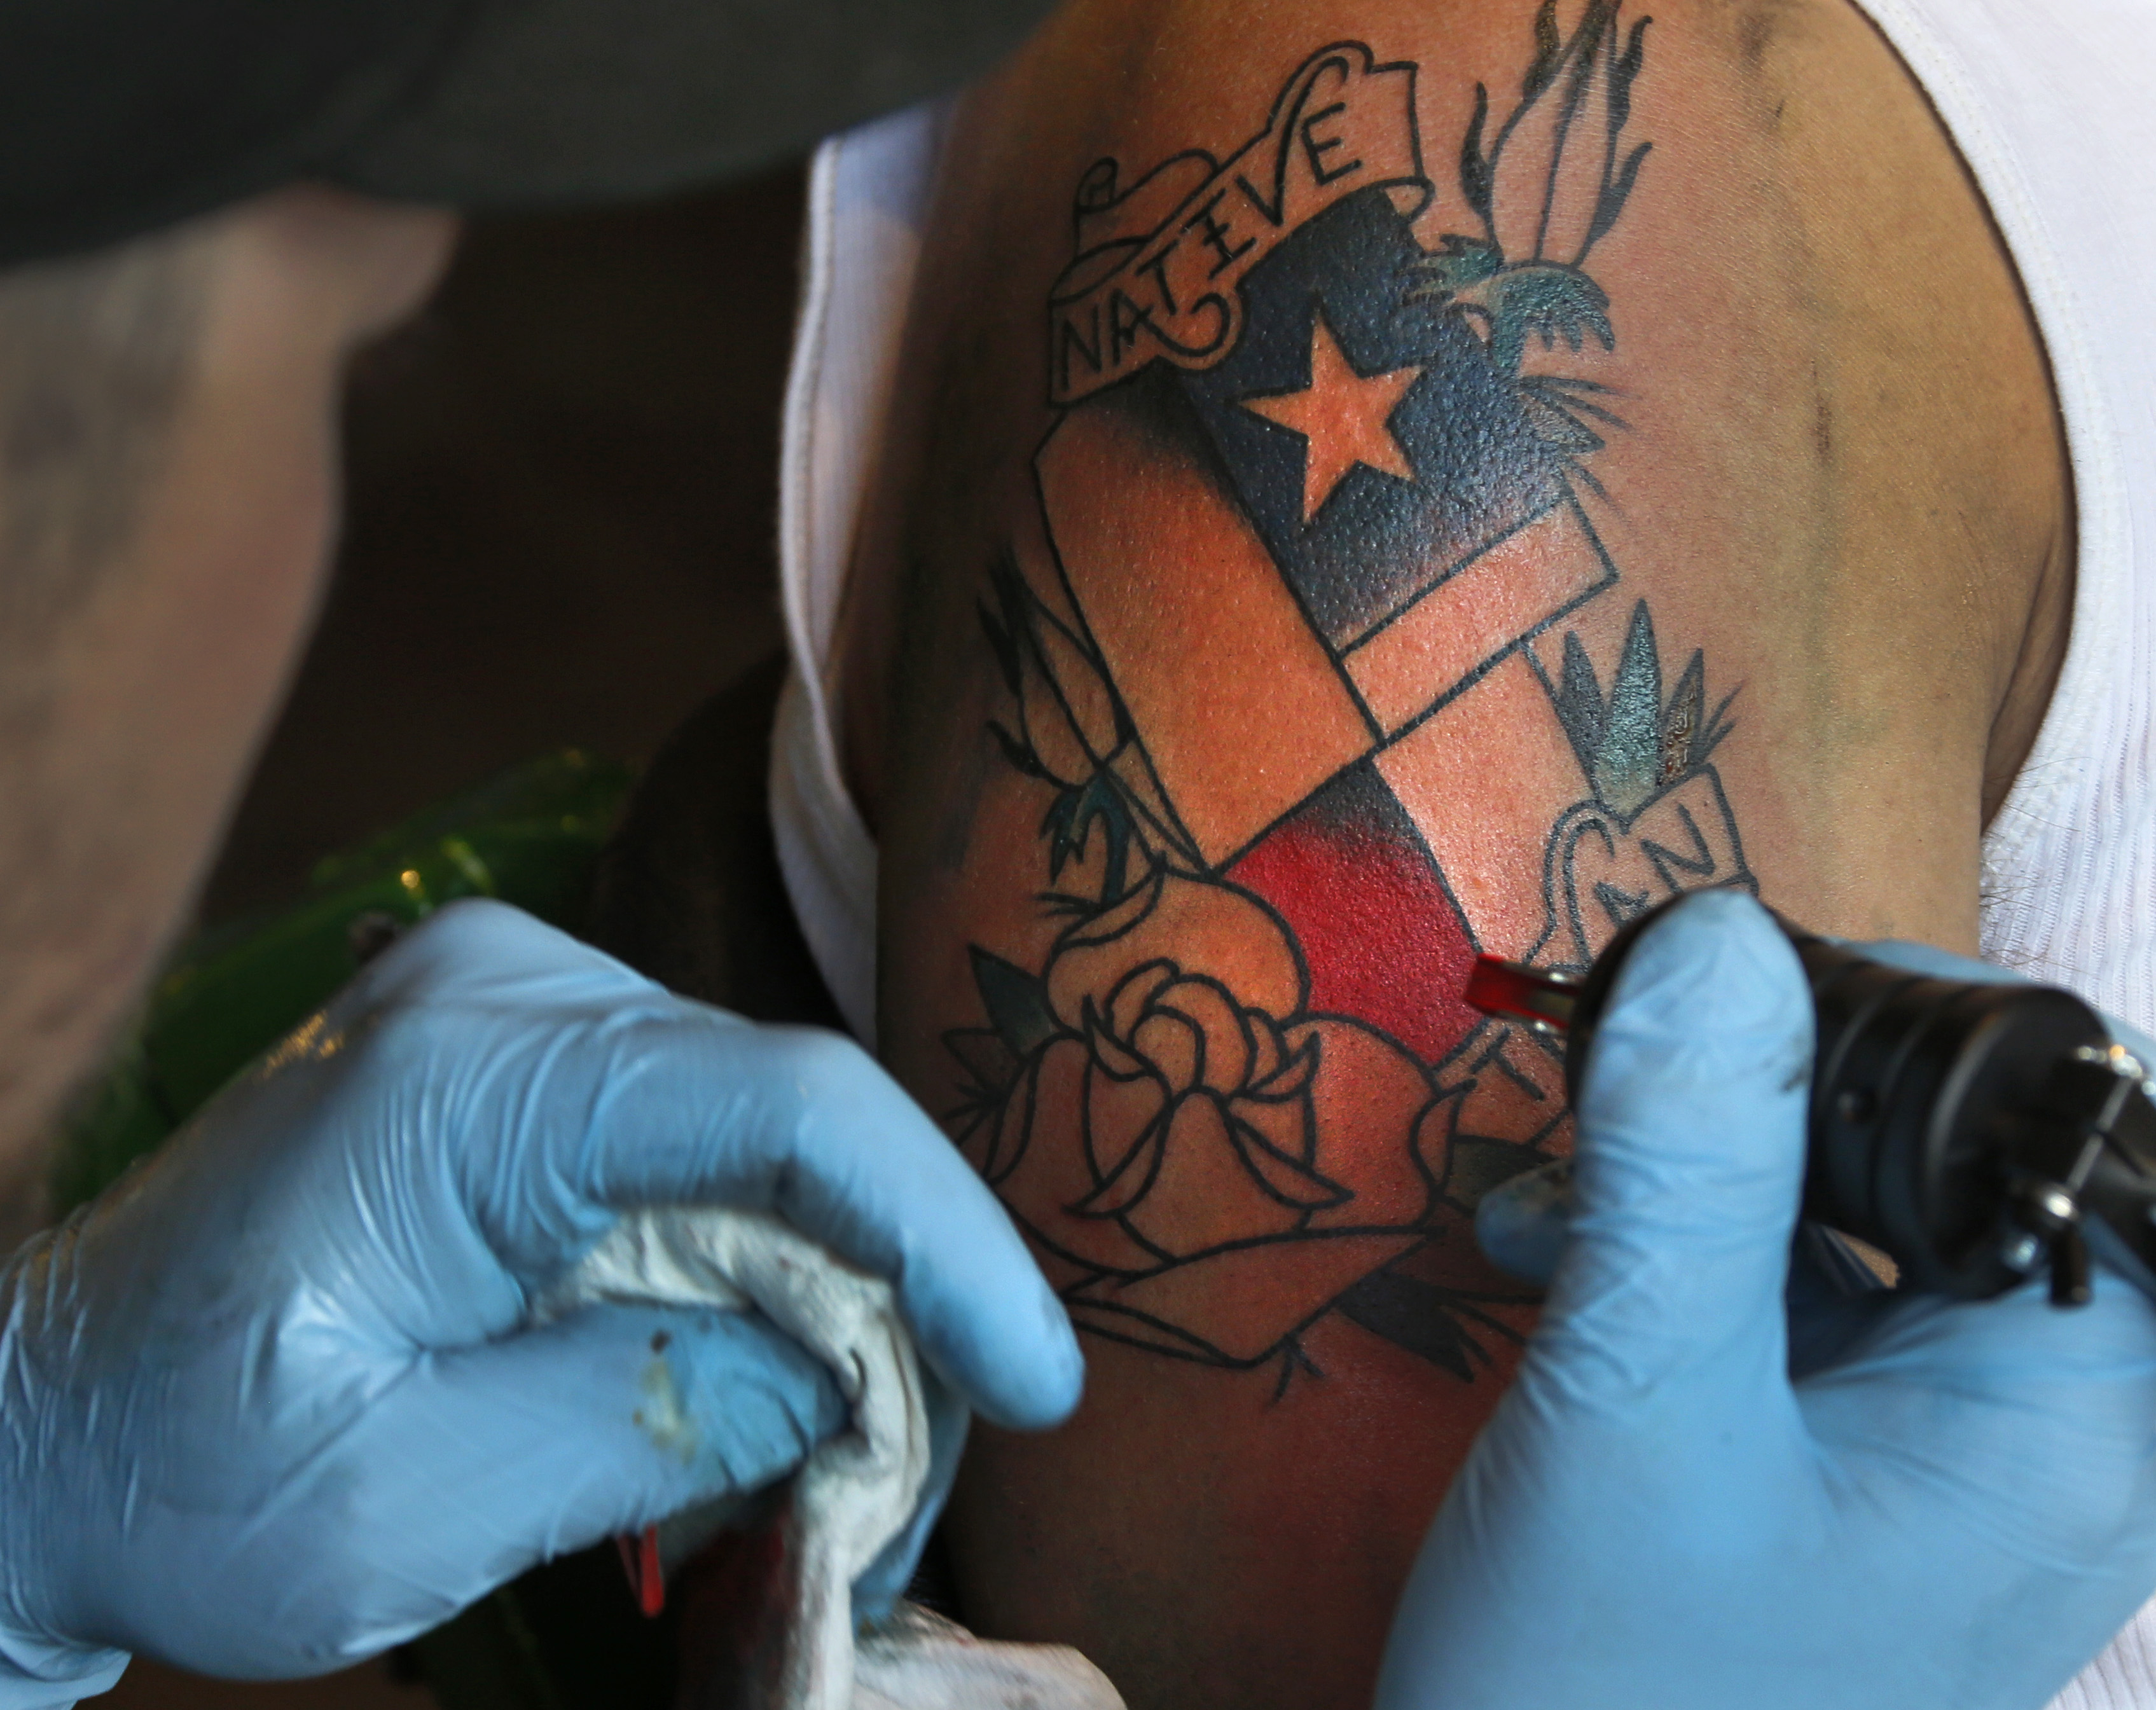 Tattoos shouldn't be a black mark against job applicants, Texas researchers  say